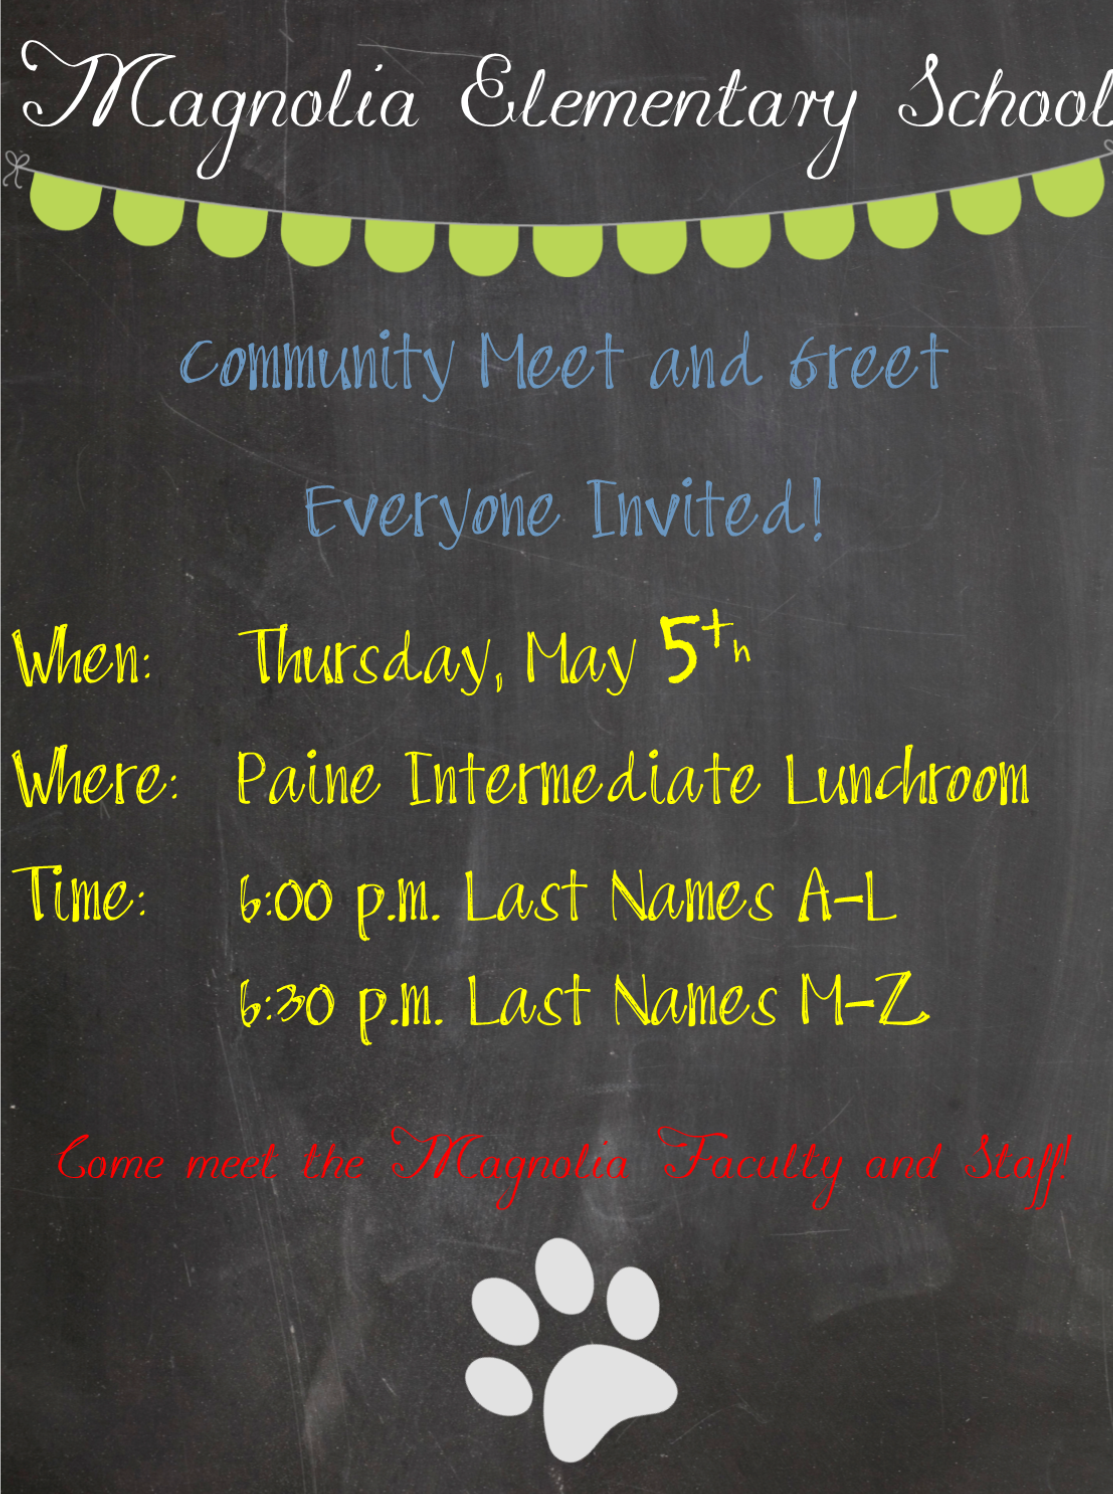 Paine Intermediate Parent Updates: Magnolia Elementary School Meet & Greet Invitation